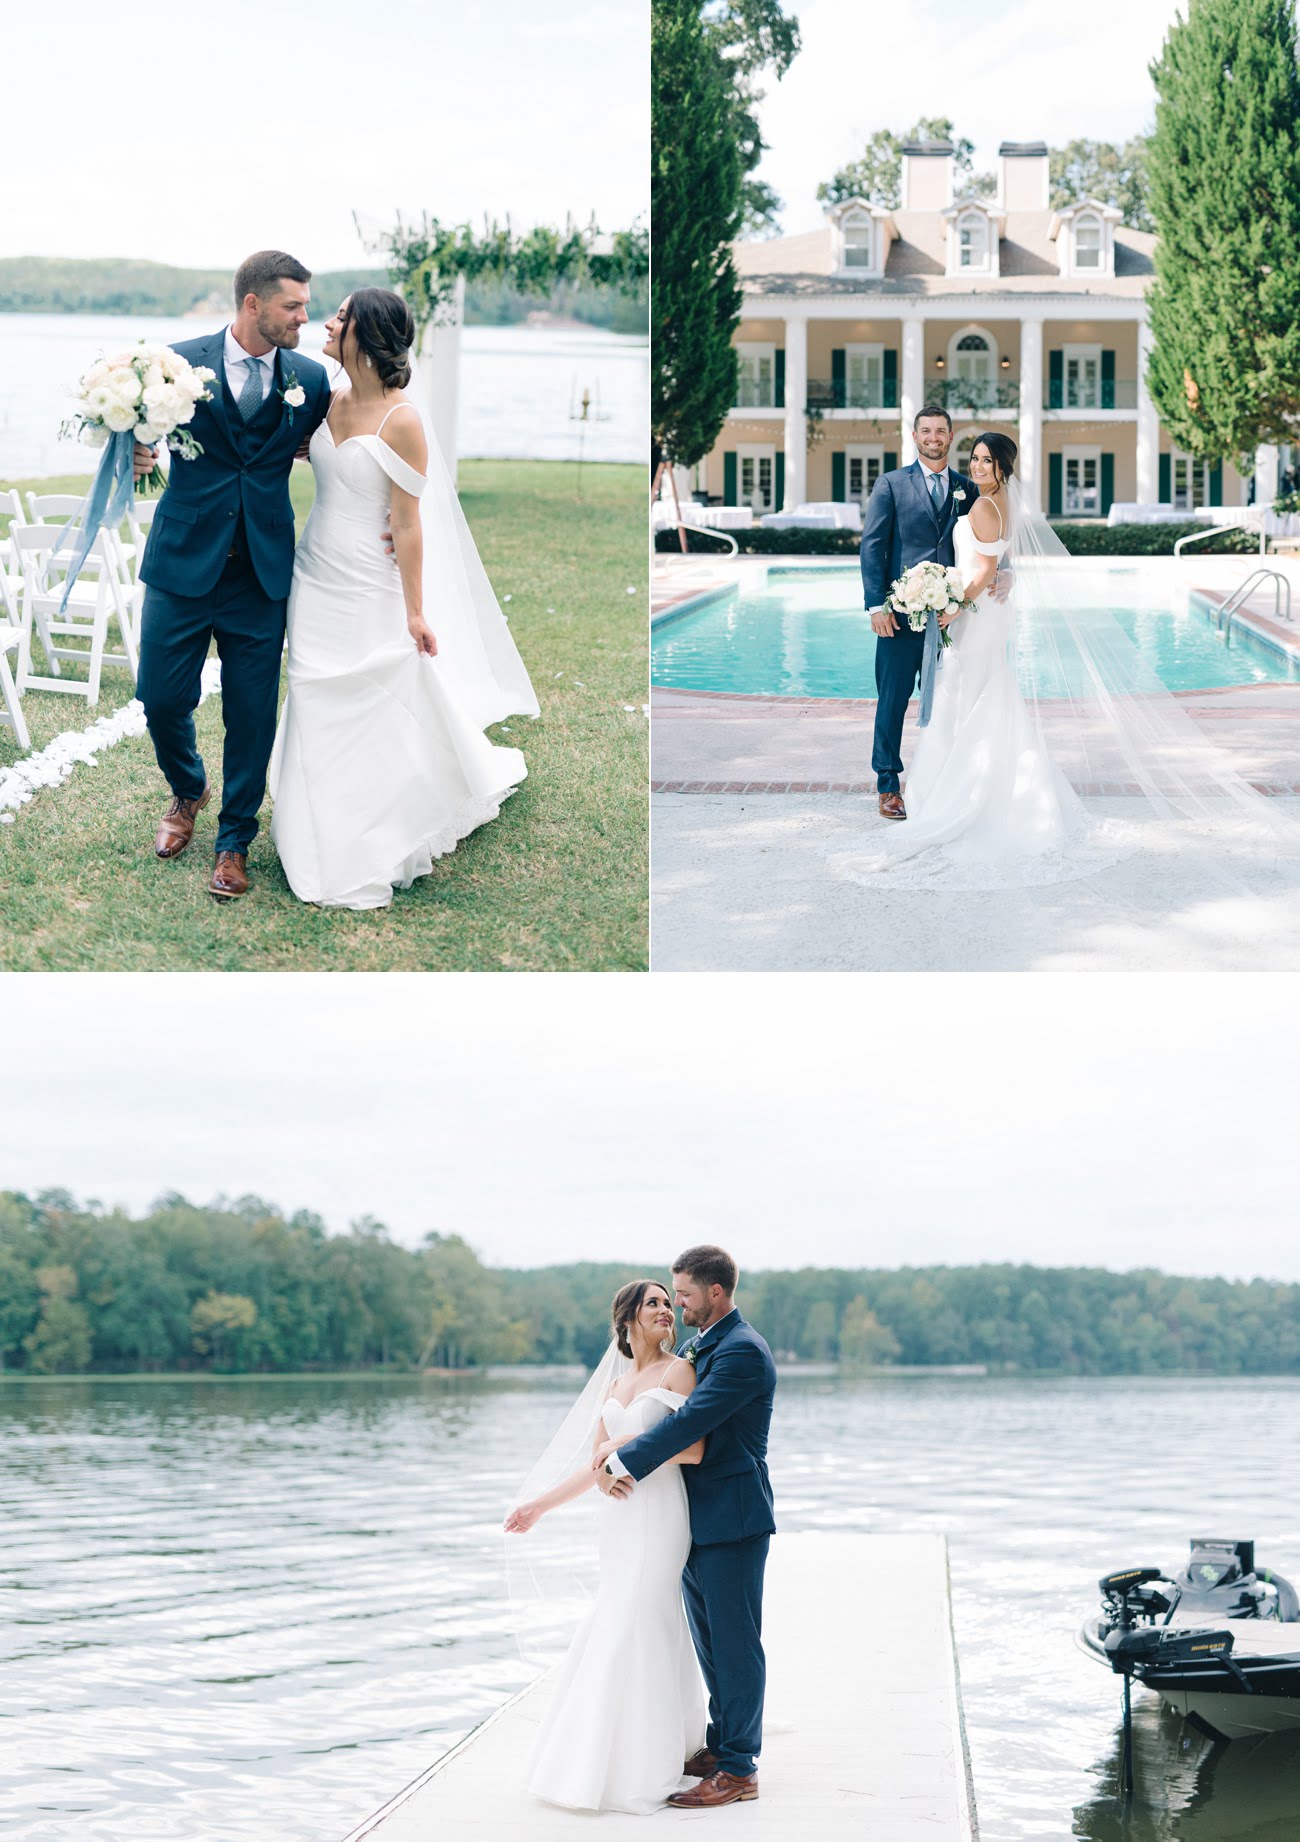 Outdoor wedding portraits at Oak Island Mansion venue in Alabama